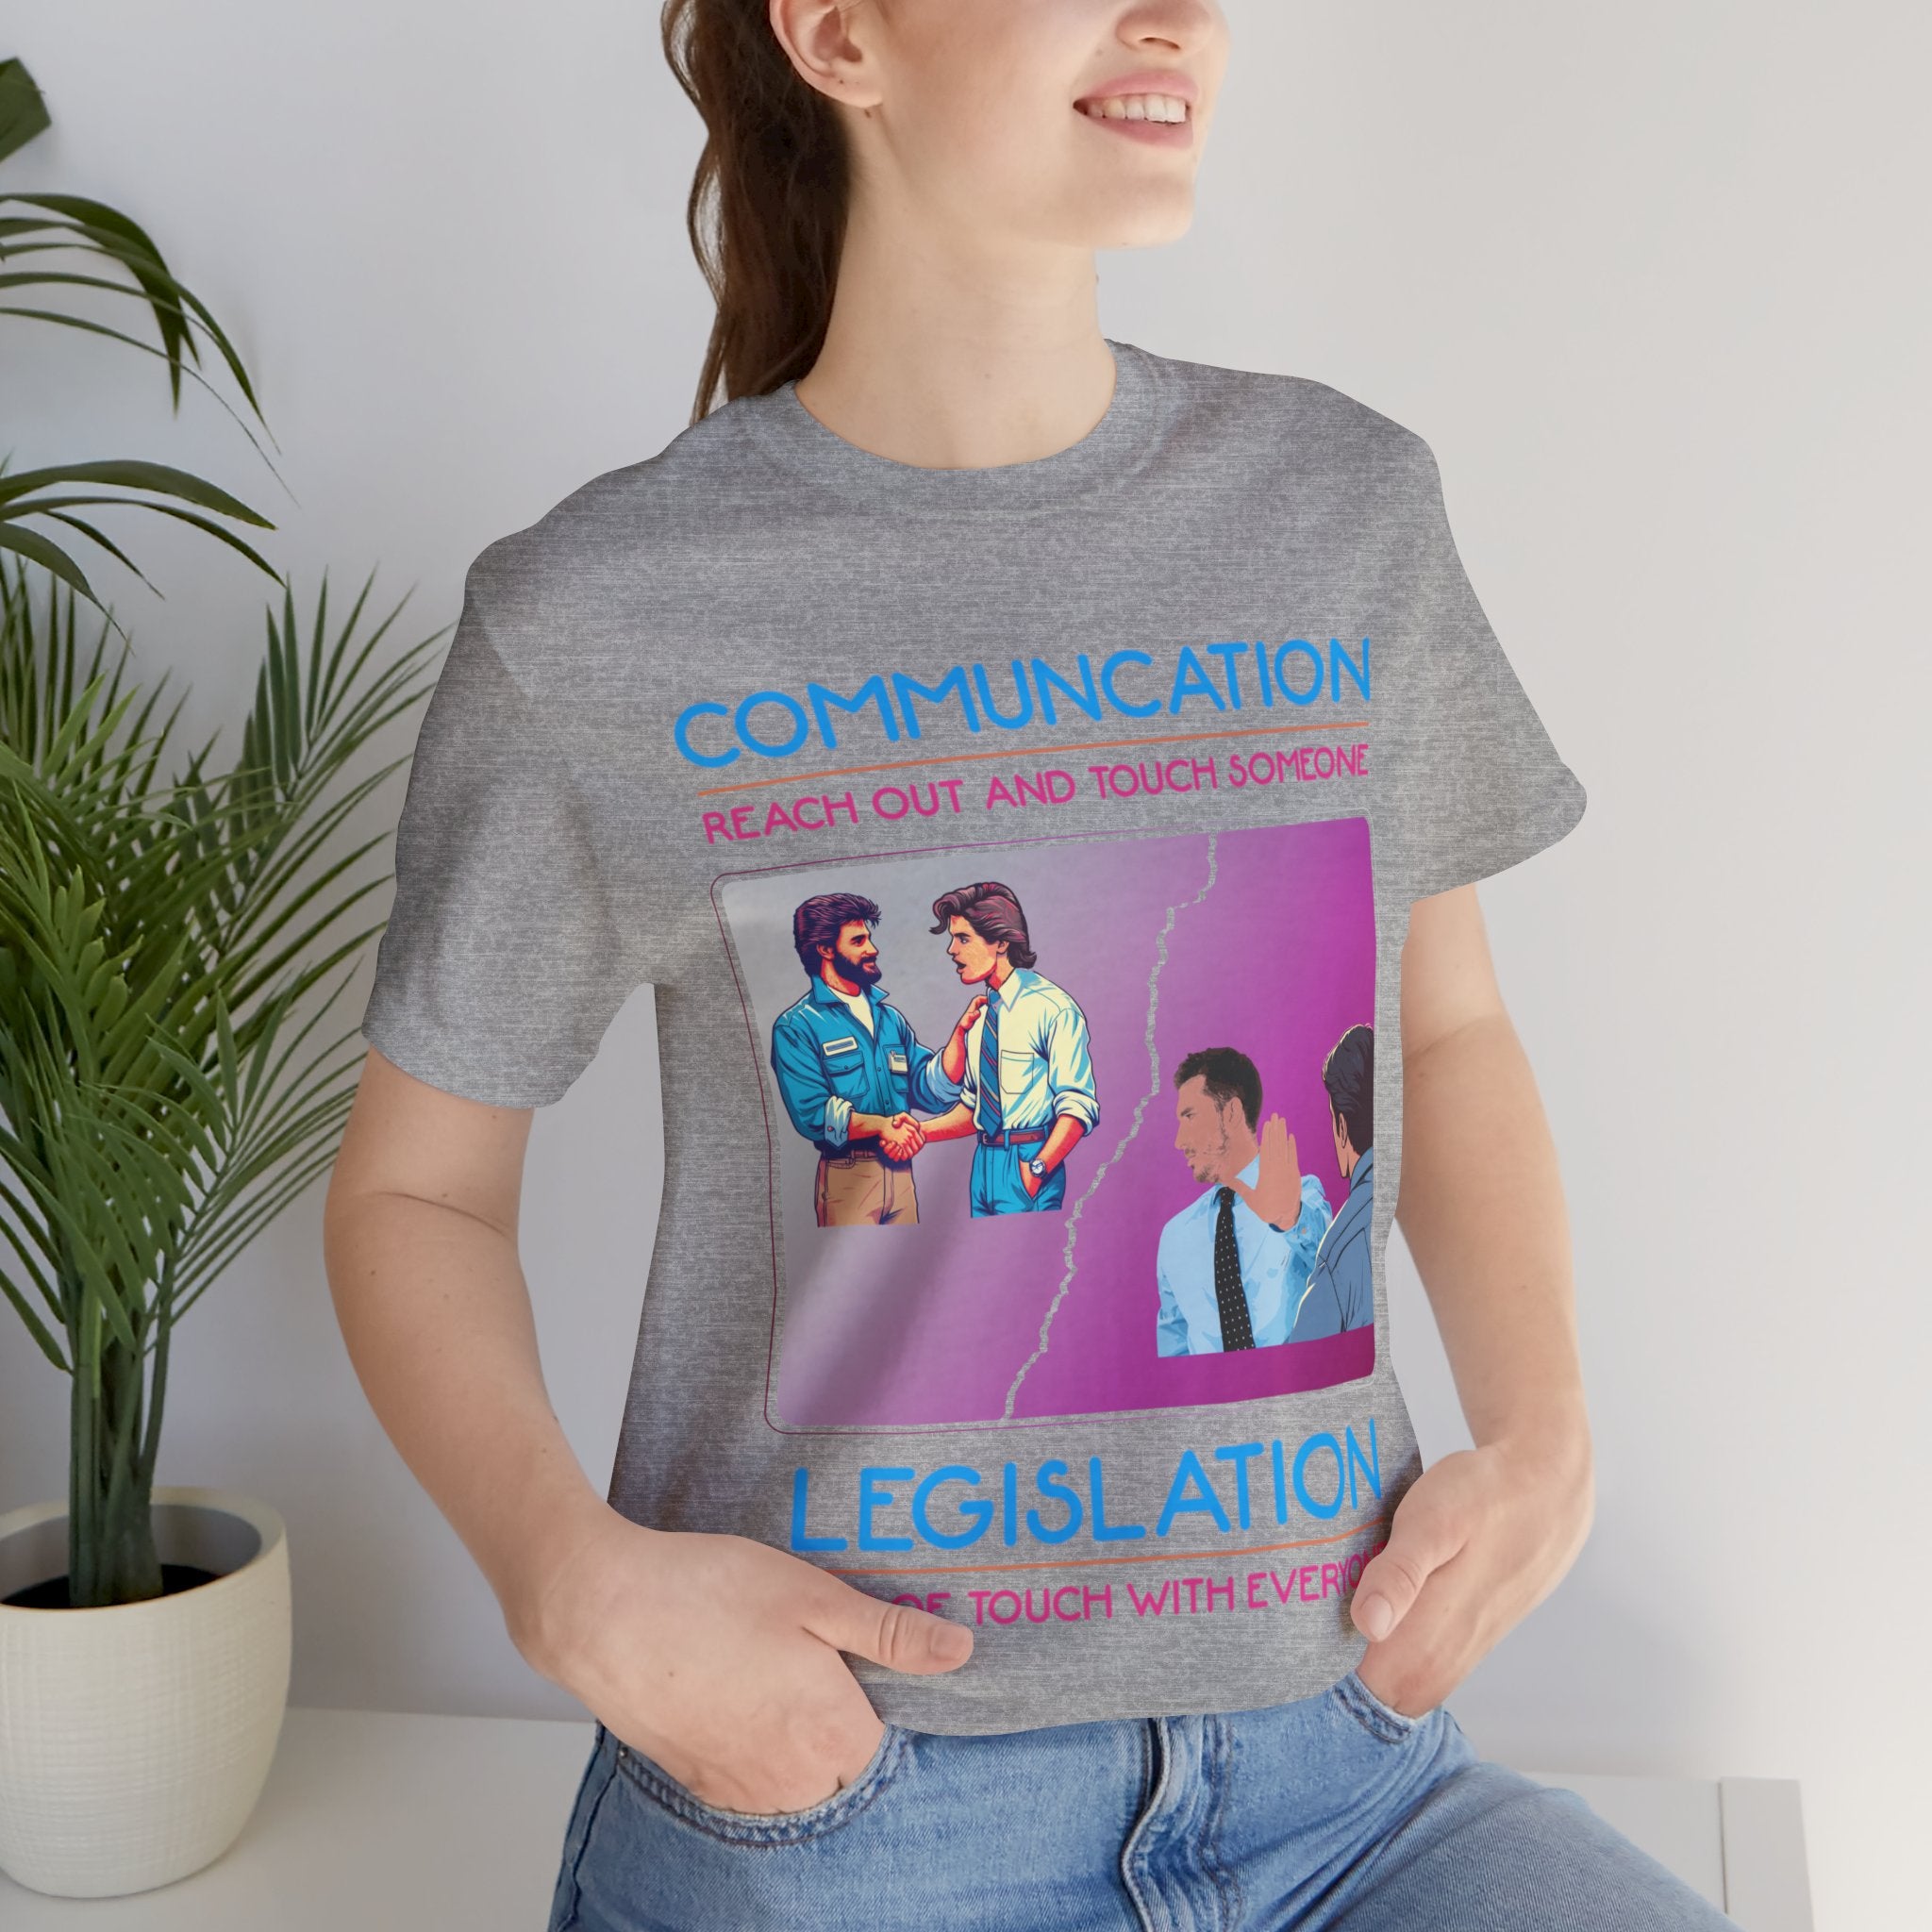 Communication | Legislation